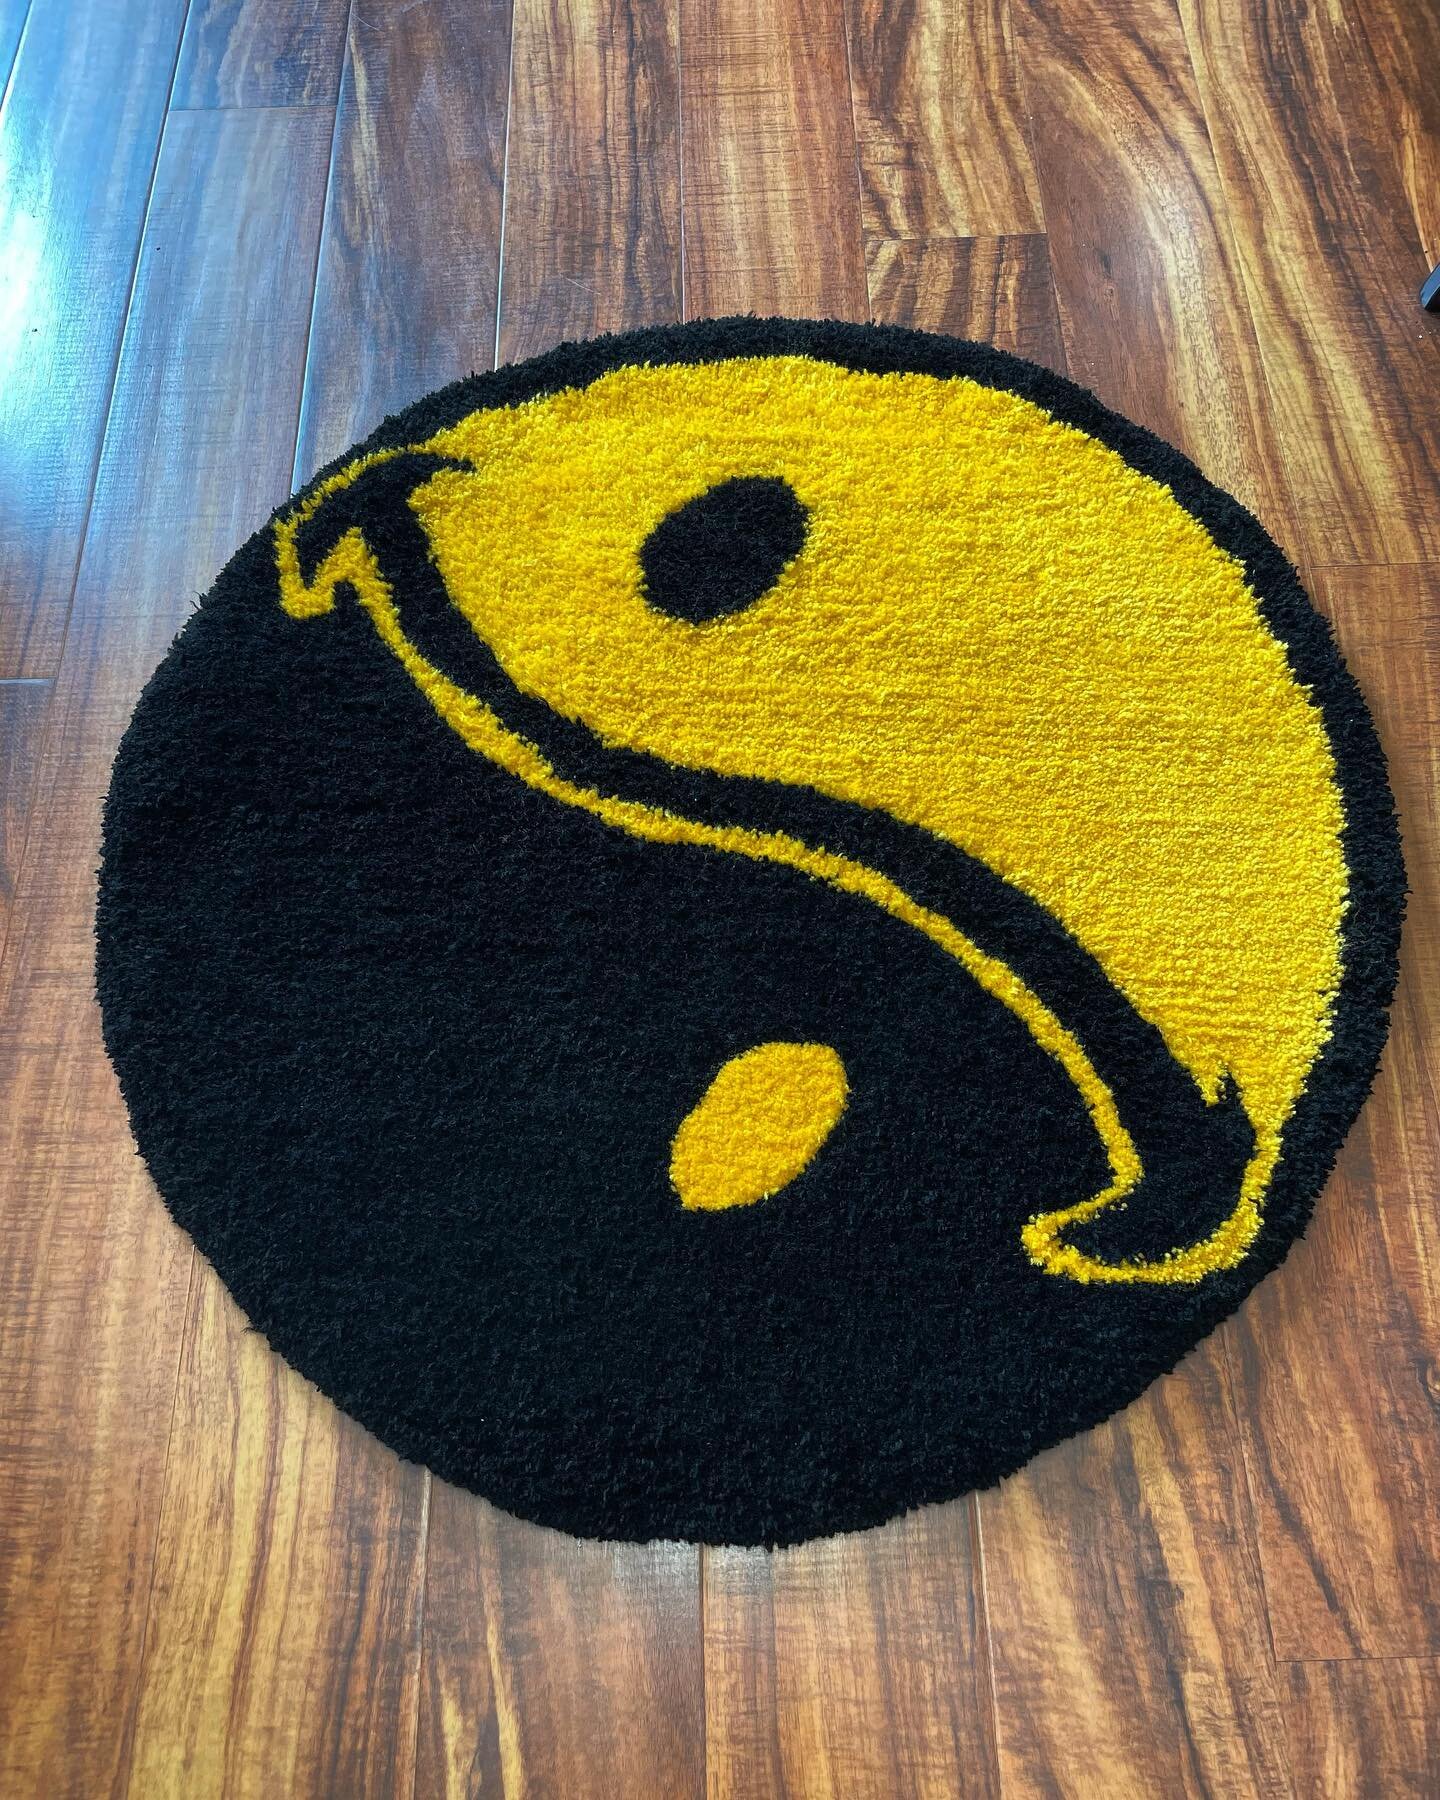 🙂☯️🙃 custom tufted rug. I&rsquo;m available to take any custom rug orders. DM me for an estimate. Process montage coming soon. 
.
.
.
.
.

#rug #handmade #rugdesign #tufting #tuftingmachine  #rugmaking #customrugs #customrug #tapestry #carpet #ruga